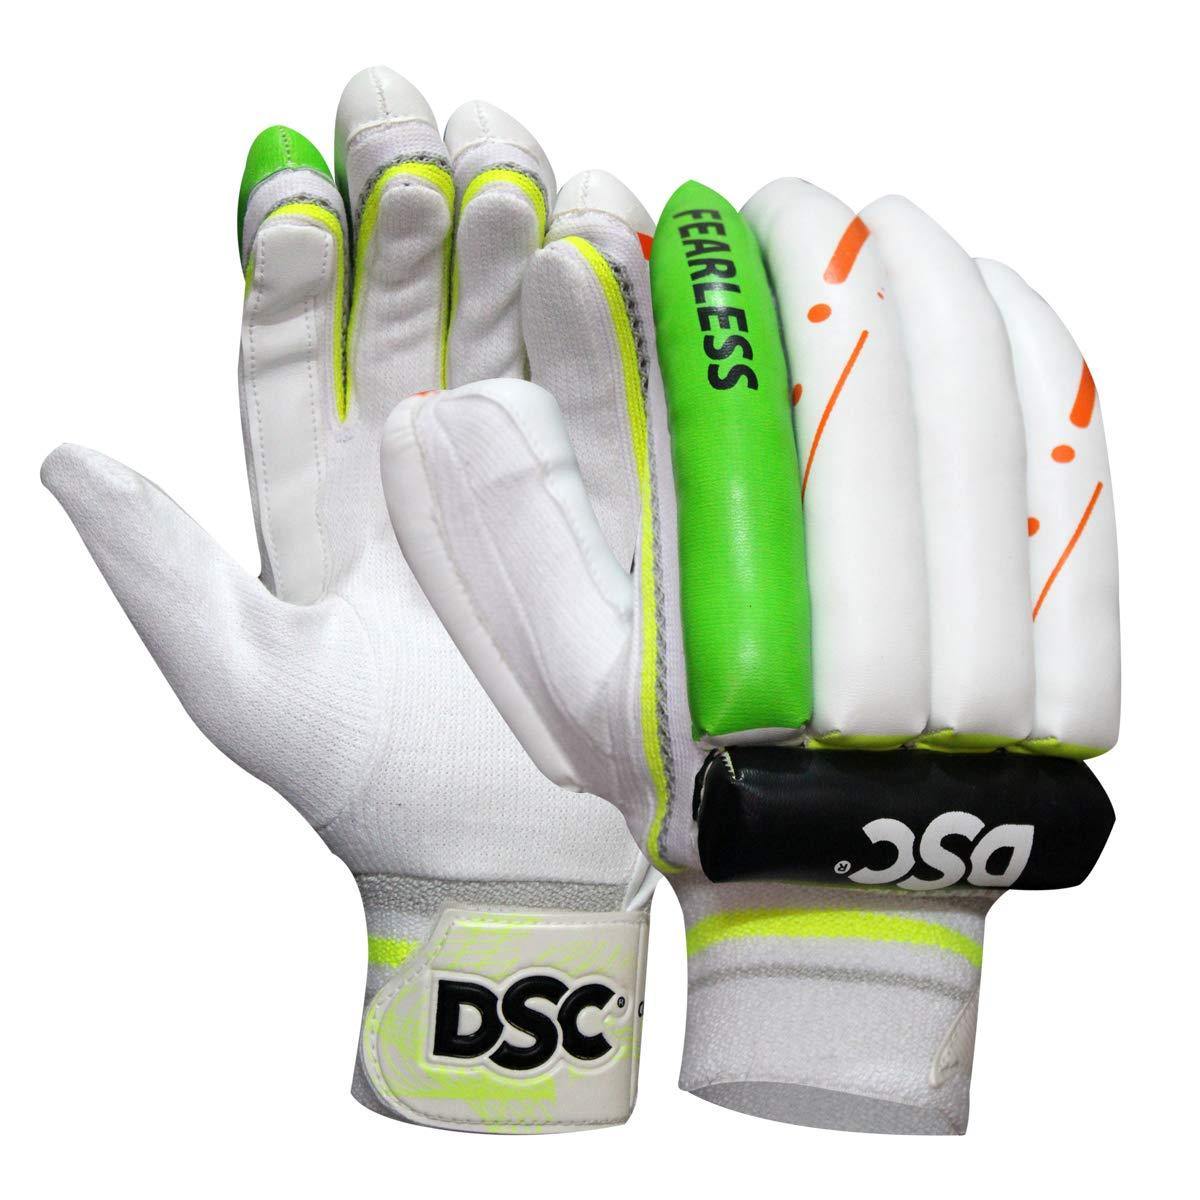 DSC Condor Ruffle Leather Cricket Batting Gloves (Right Hand) - Best Price online Prokicksports.com